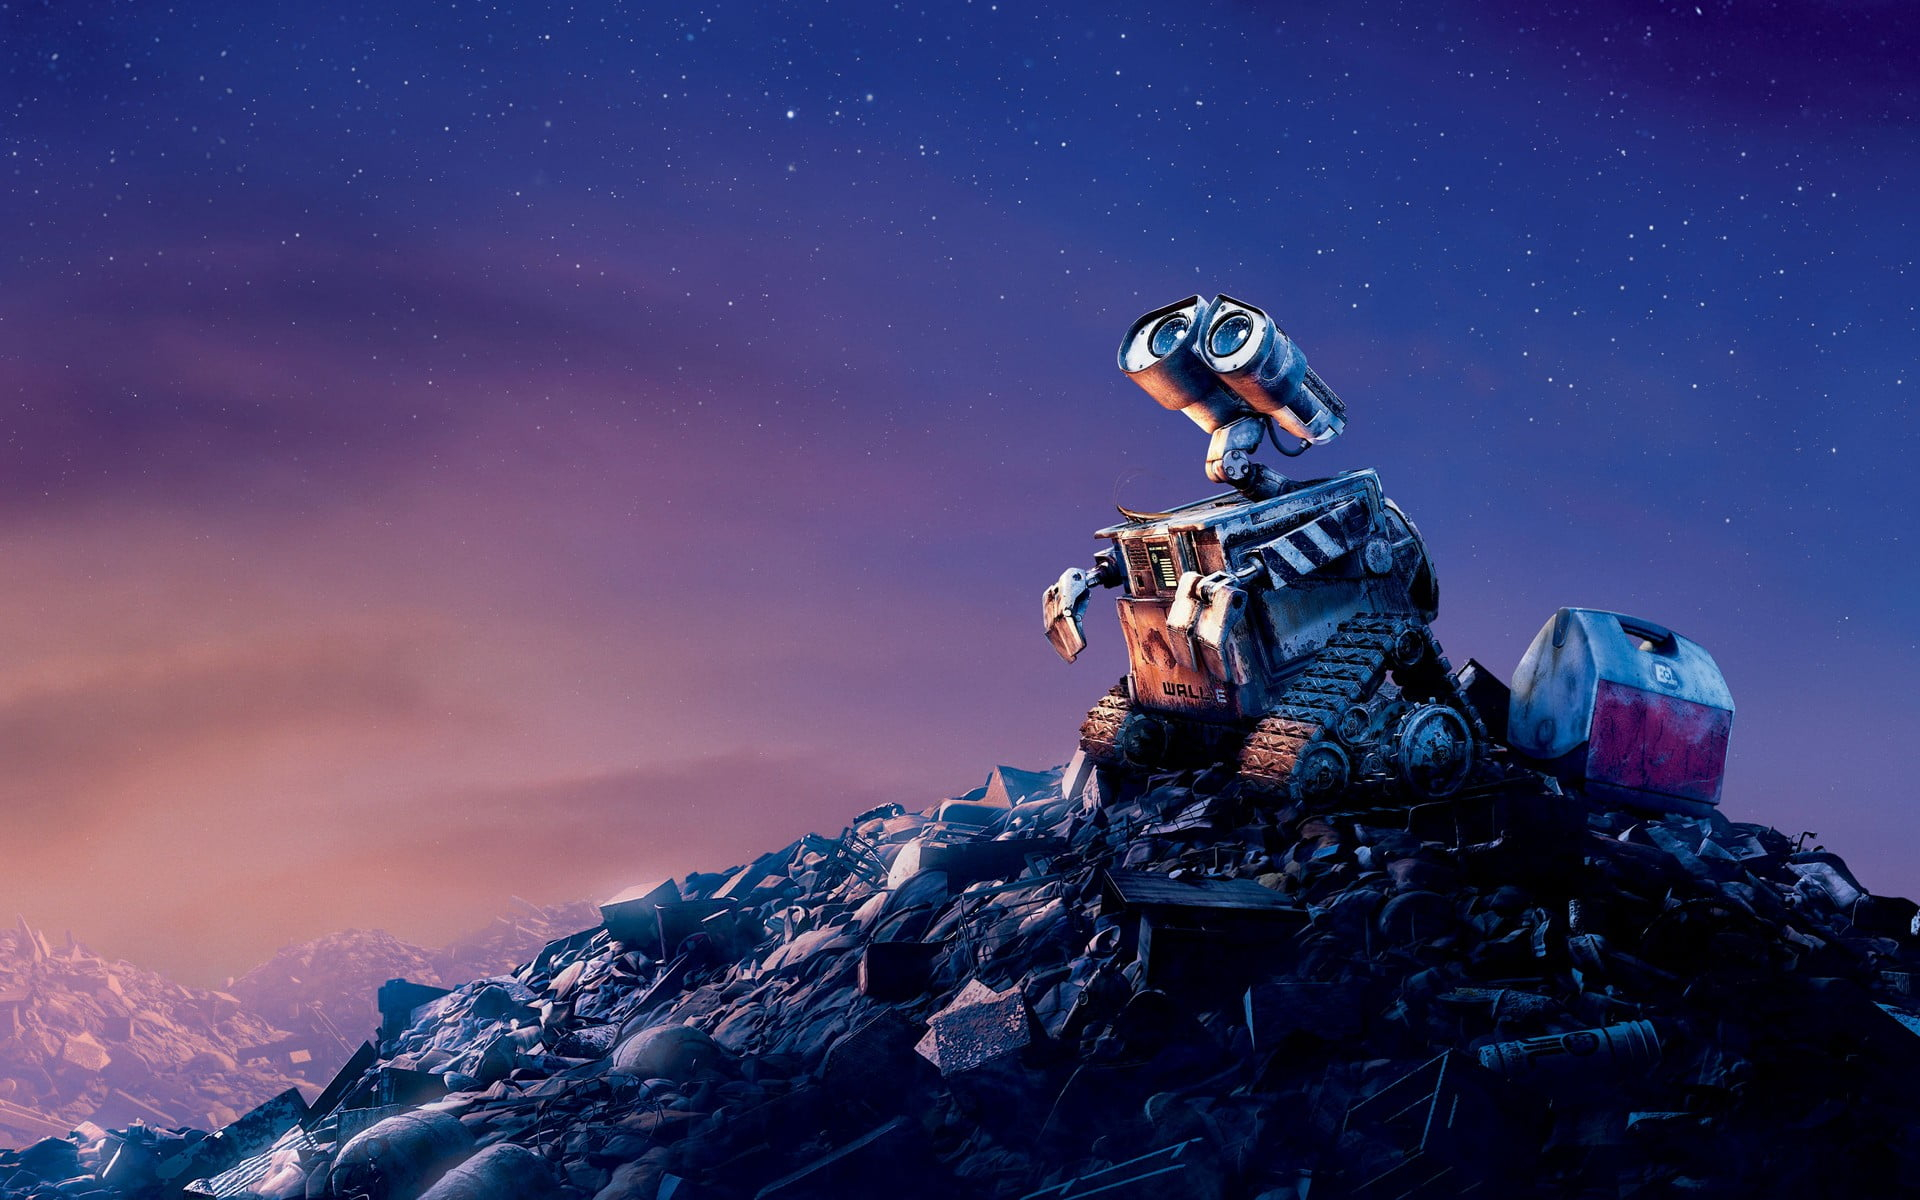 Disney Wall-E digital wallpaper Pixar Animation Studios